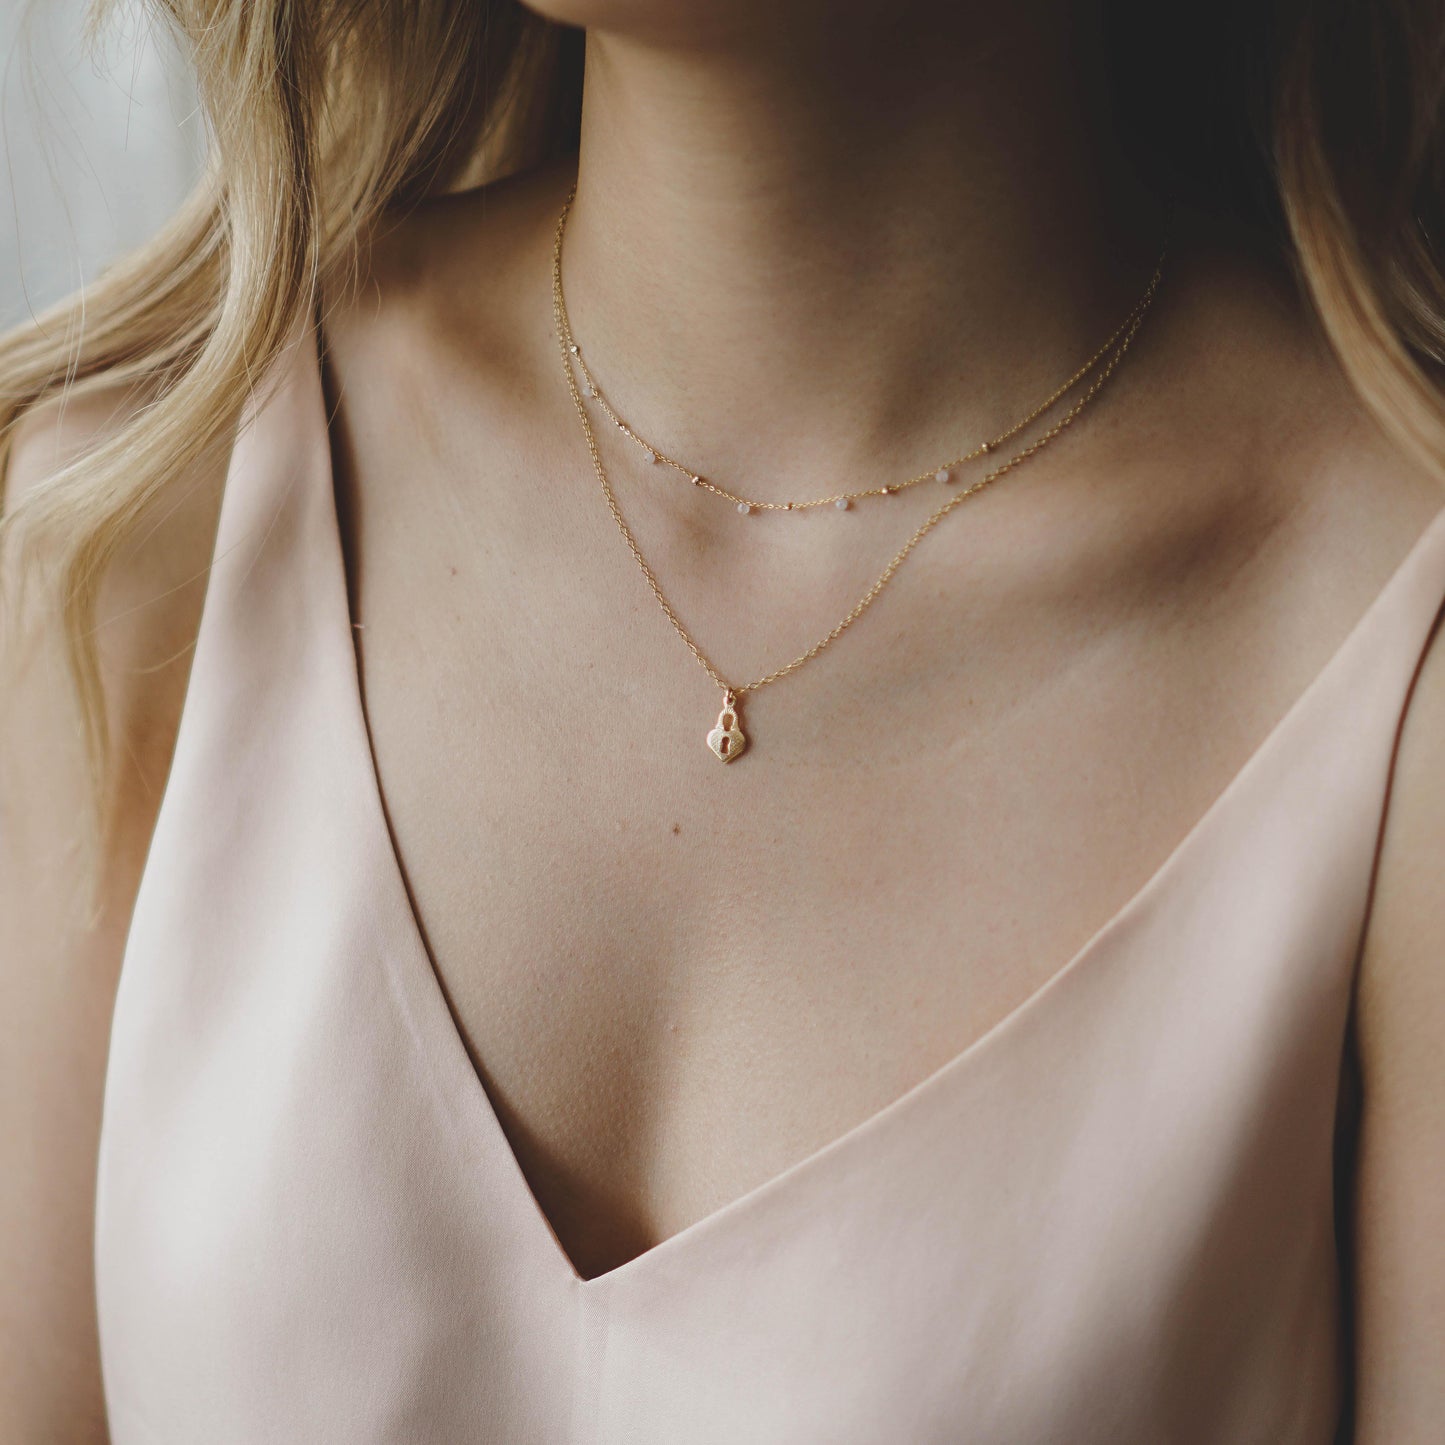 Dainty Heart Lock Necklace - 14K Gold Filled - Studdedheartz